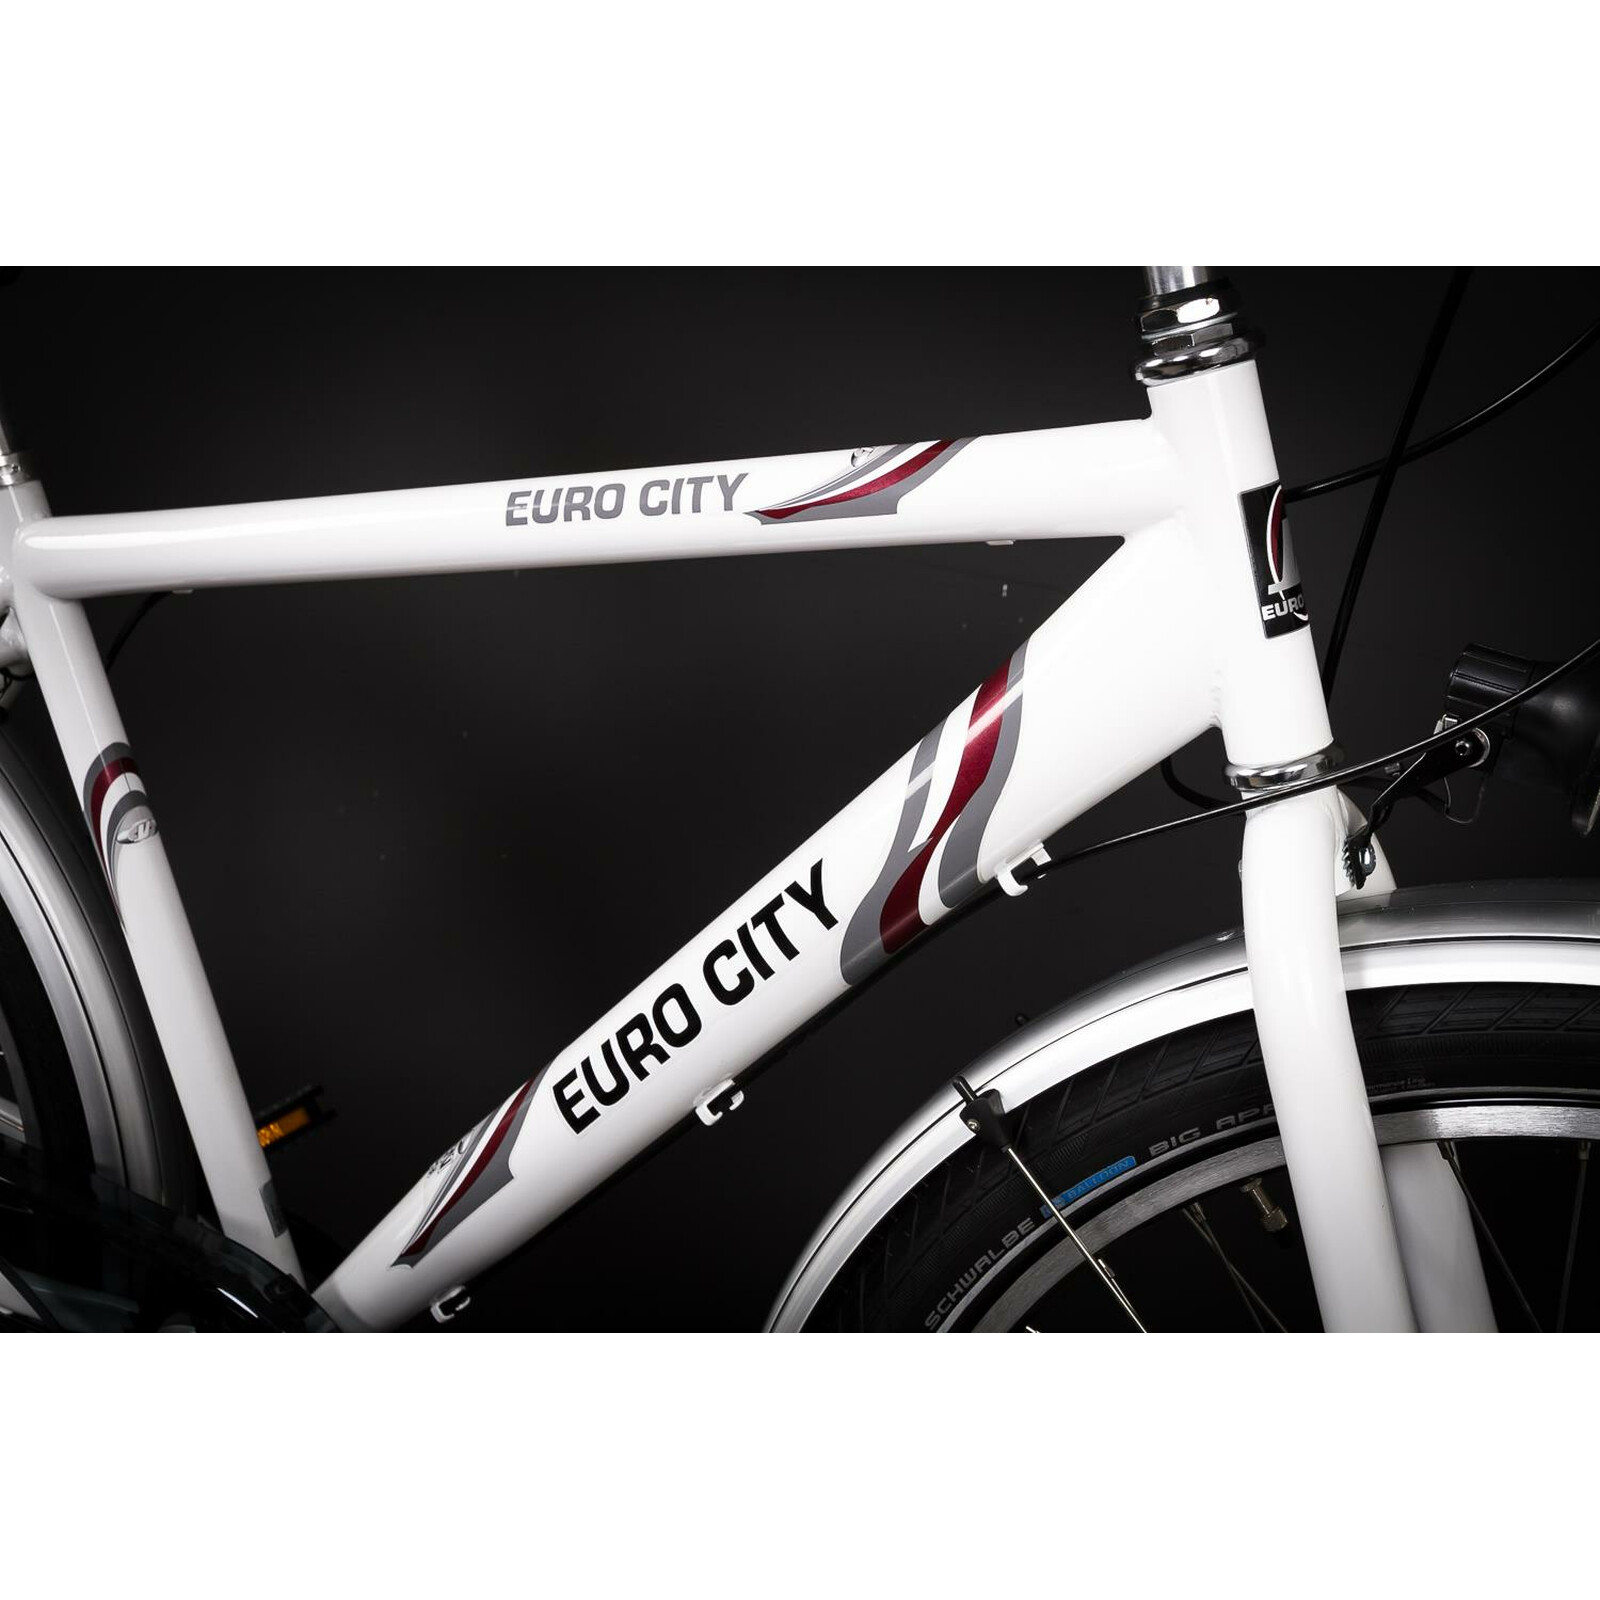 Fahrrad Dekor Satz Aufkleber Rahmen Frame Decal Sticker Euro City Rot Weiß Grau